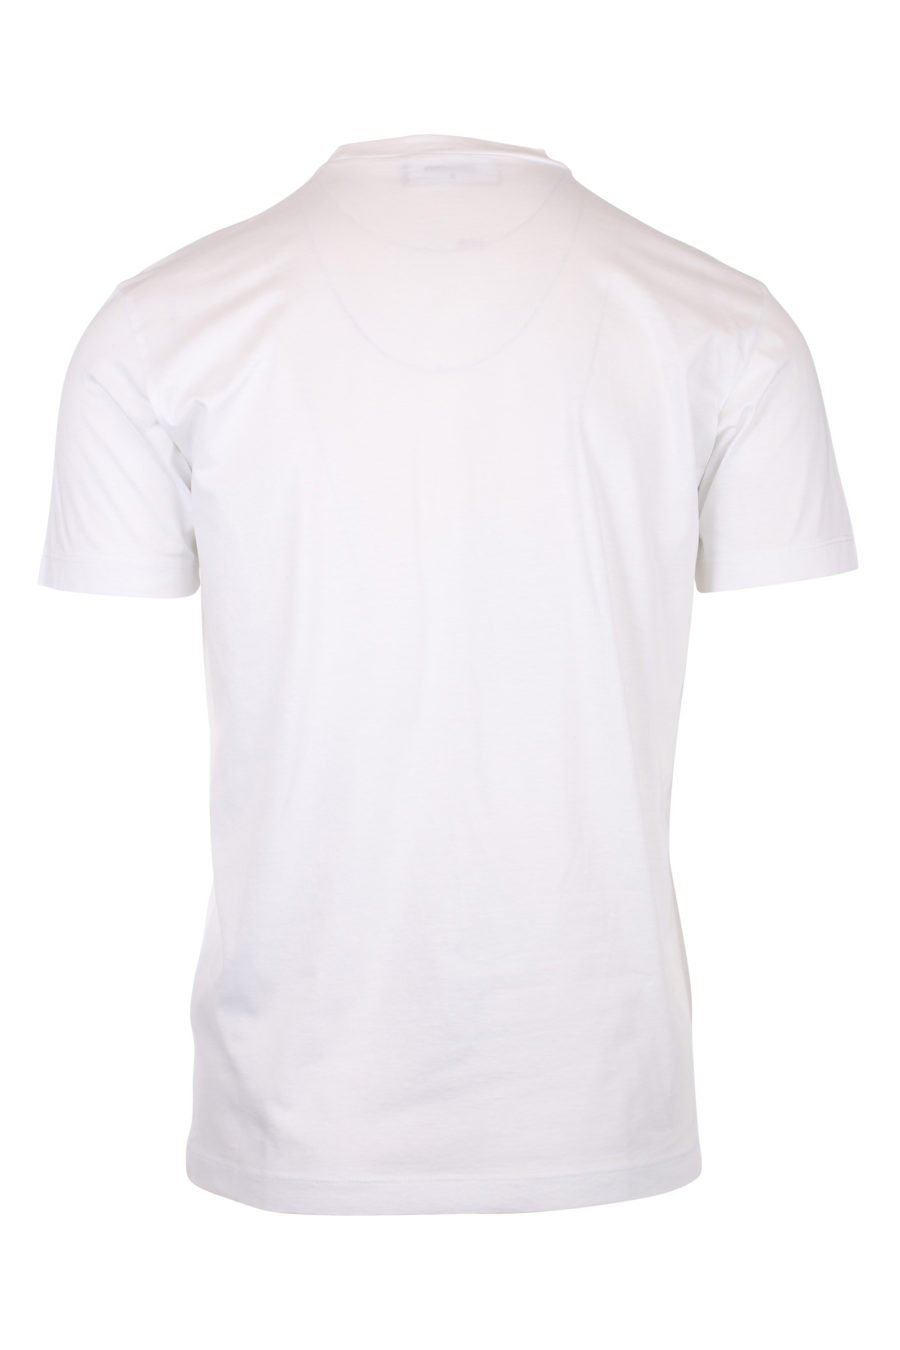 Camiseta blanca con logo construcción - IMG 9769